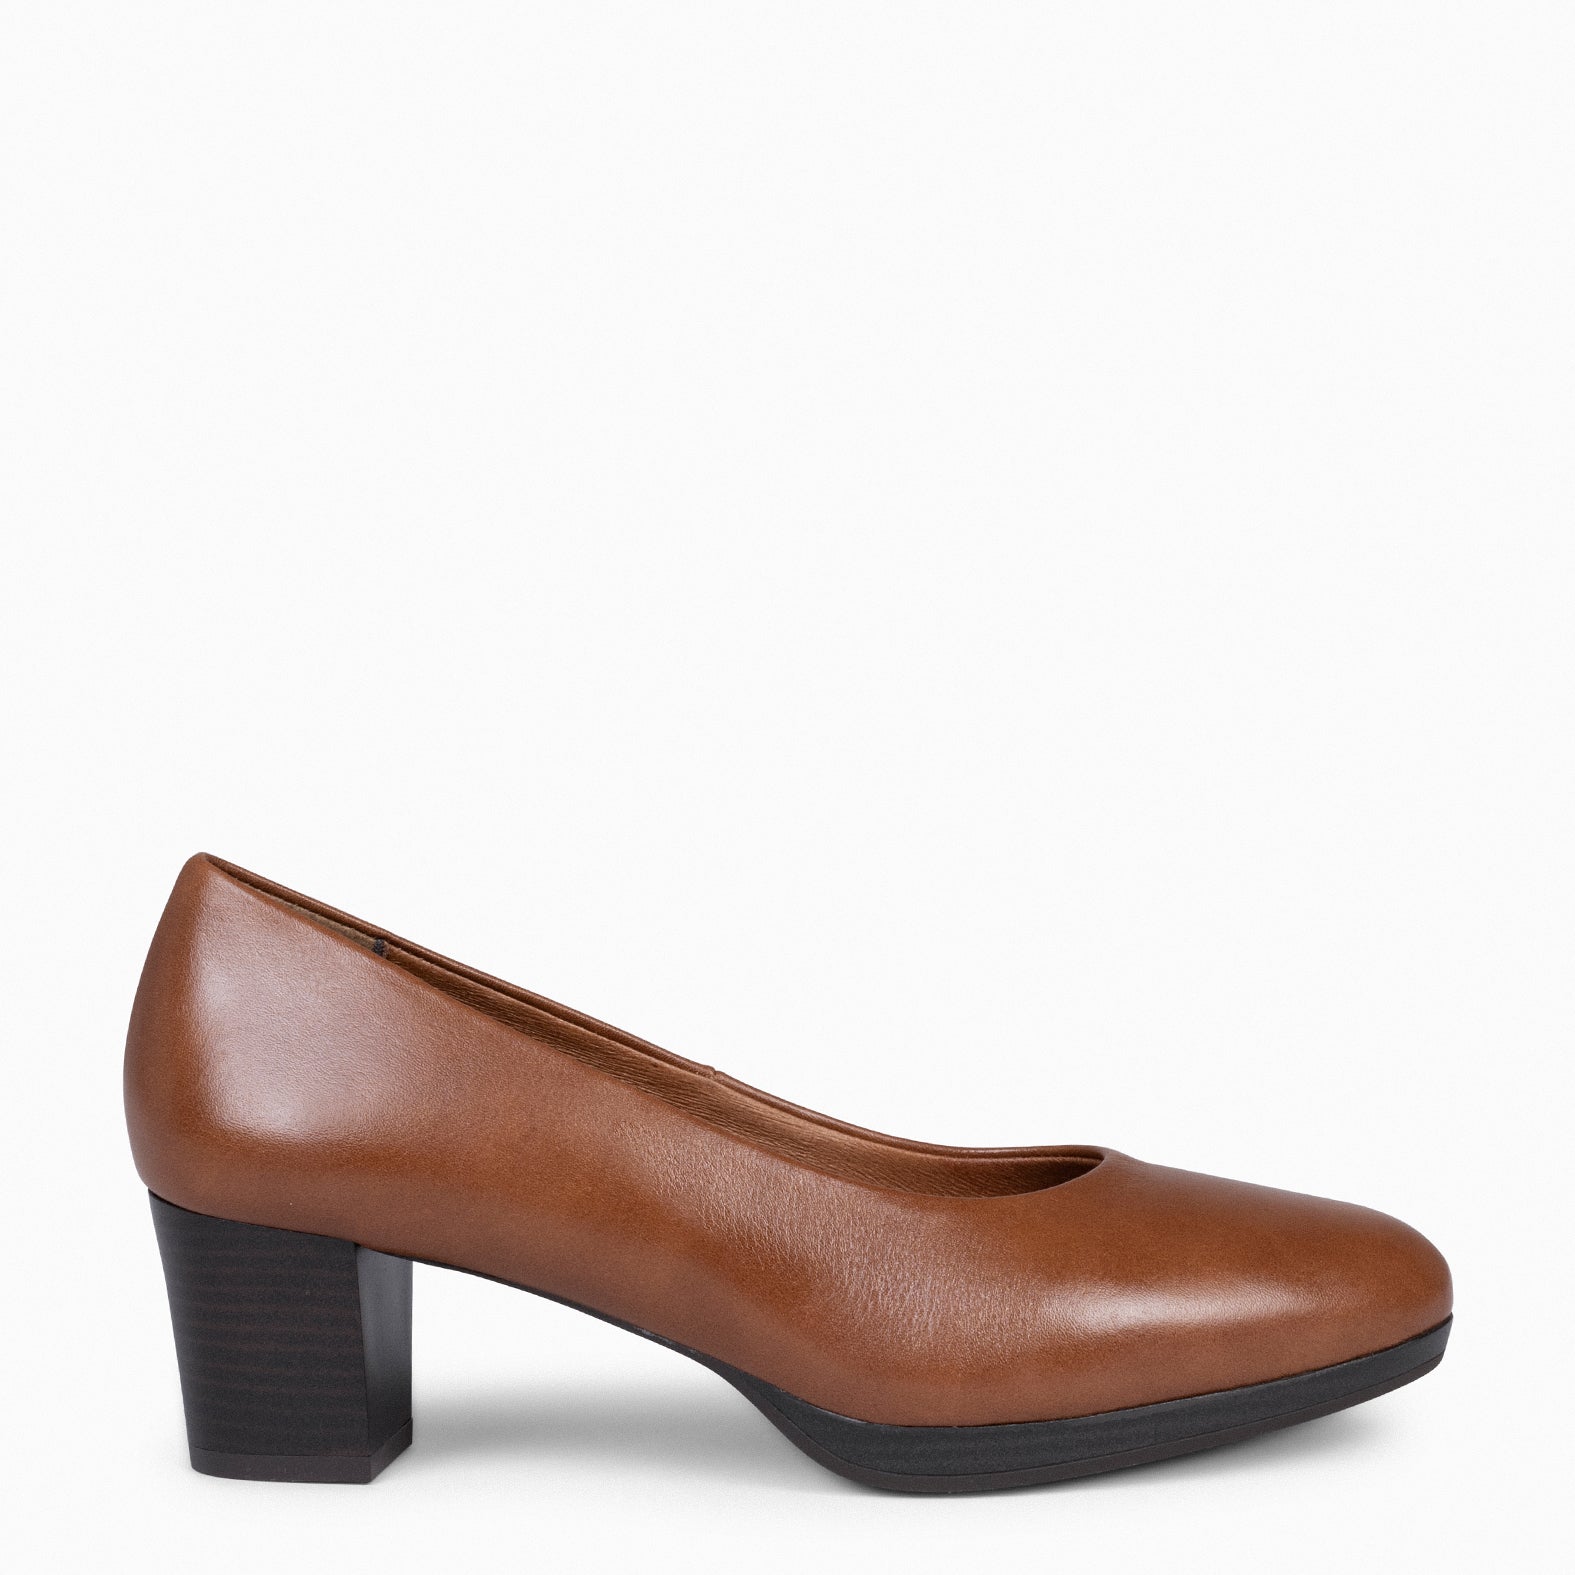 FLIGHT S – CAMEL low heels and platform shoes